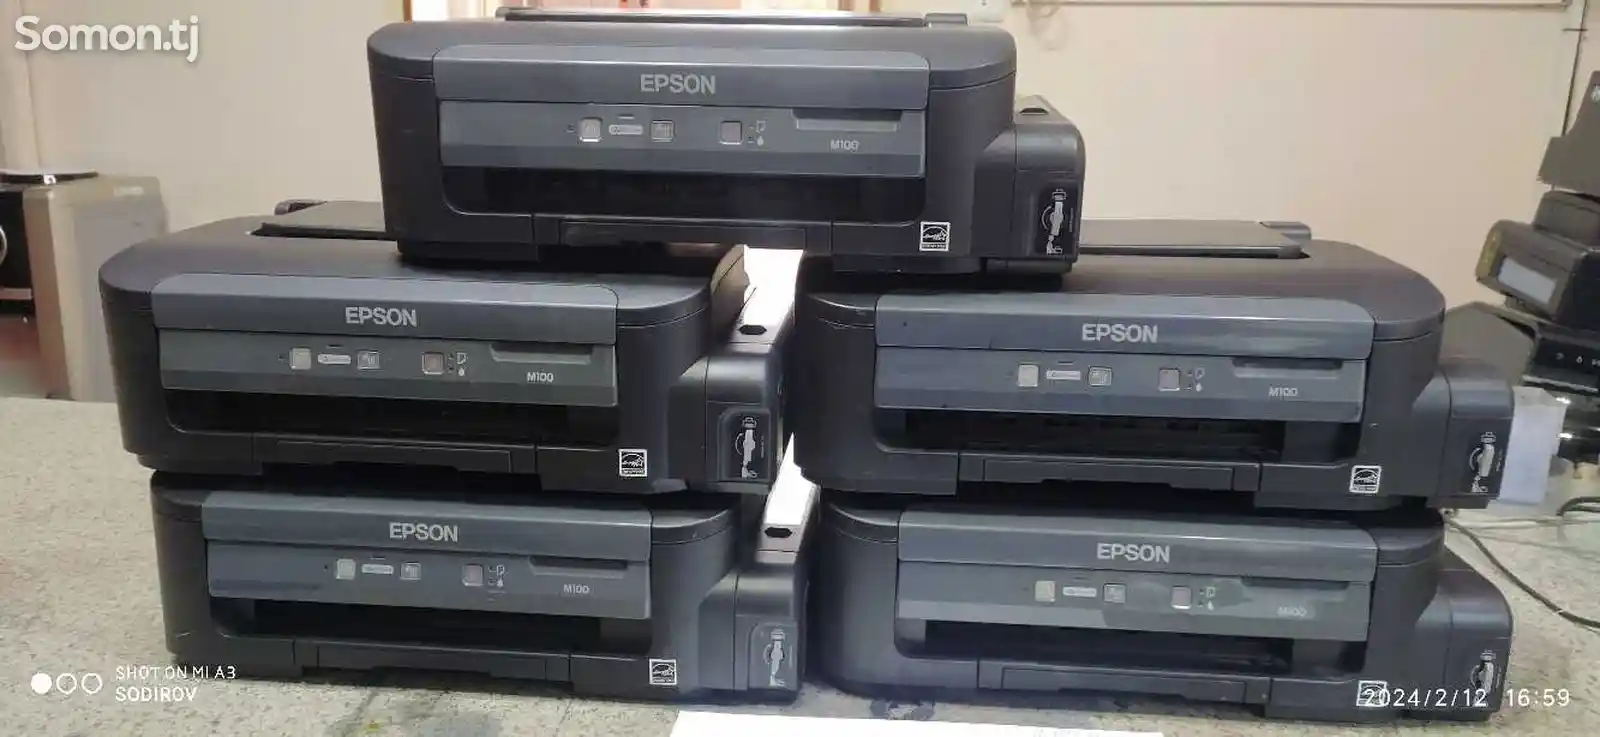 Принтер Epson M100-1